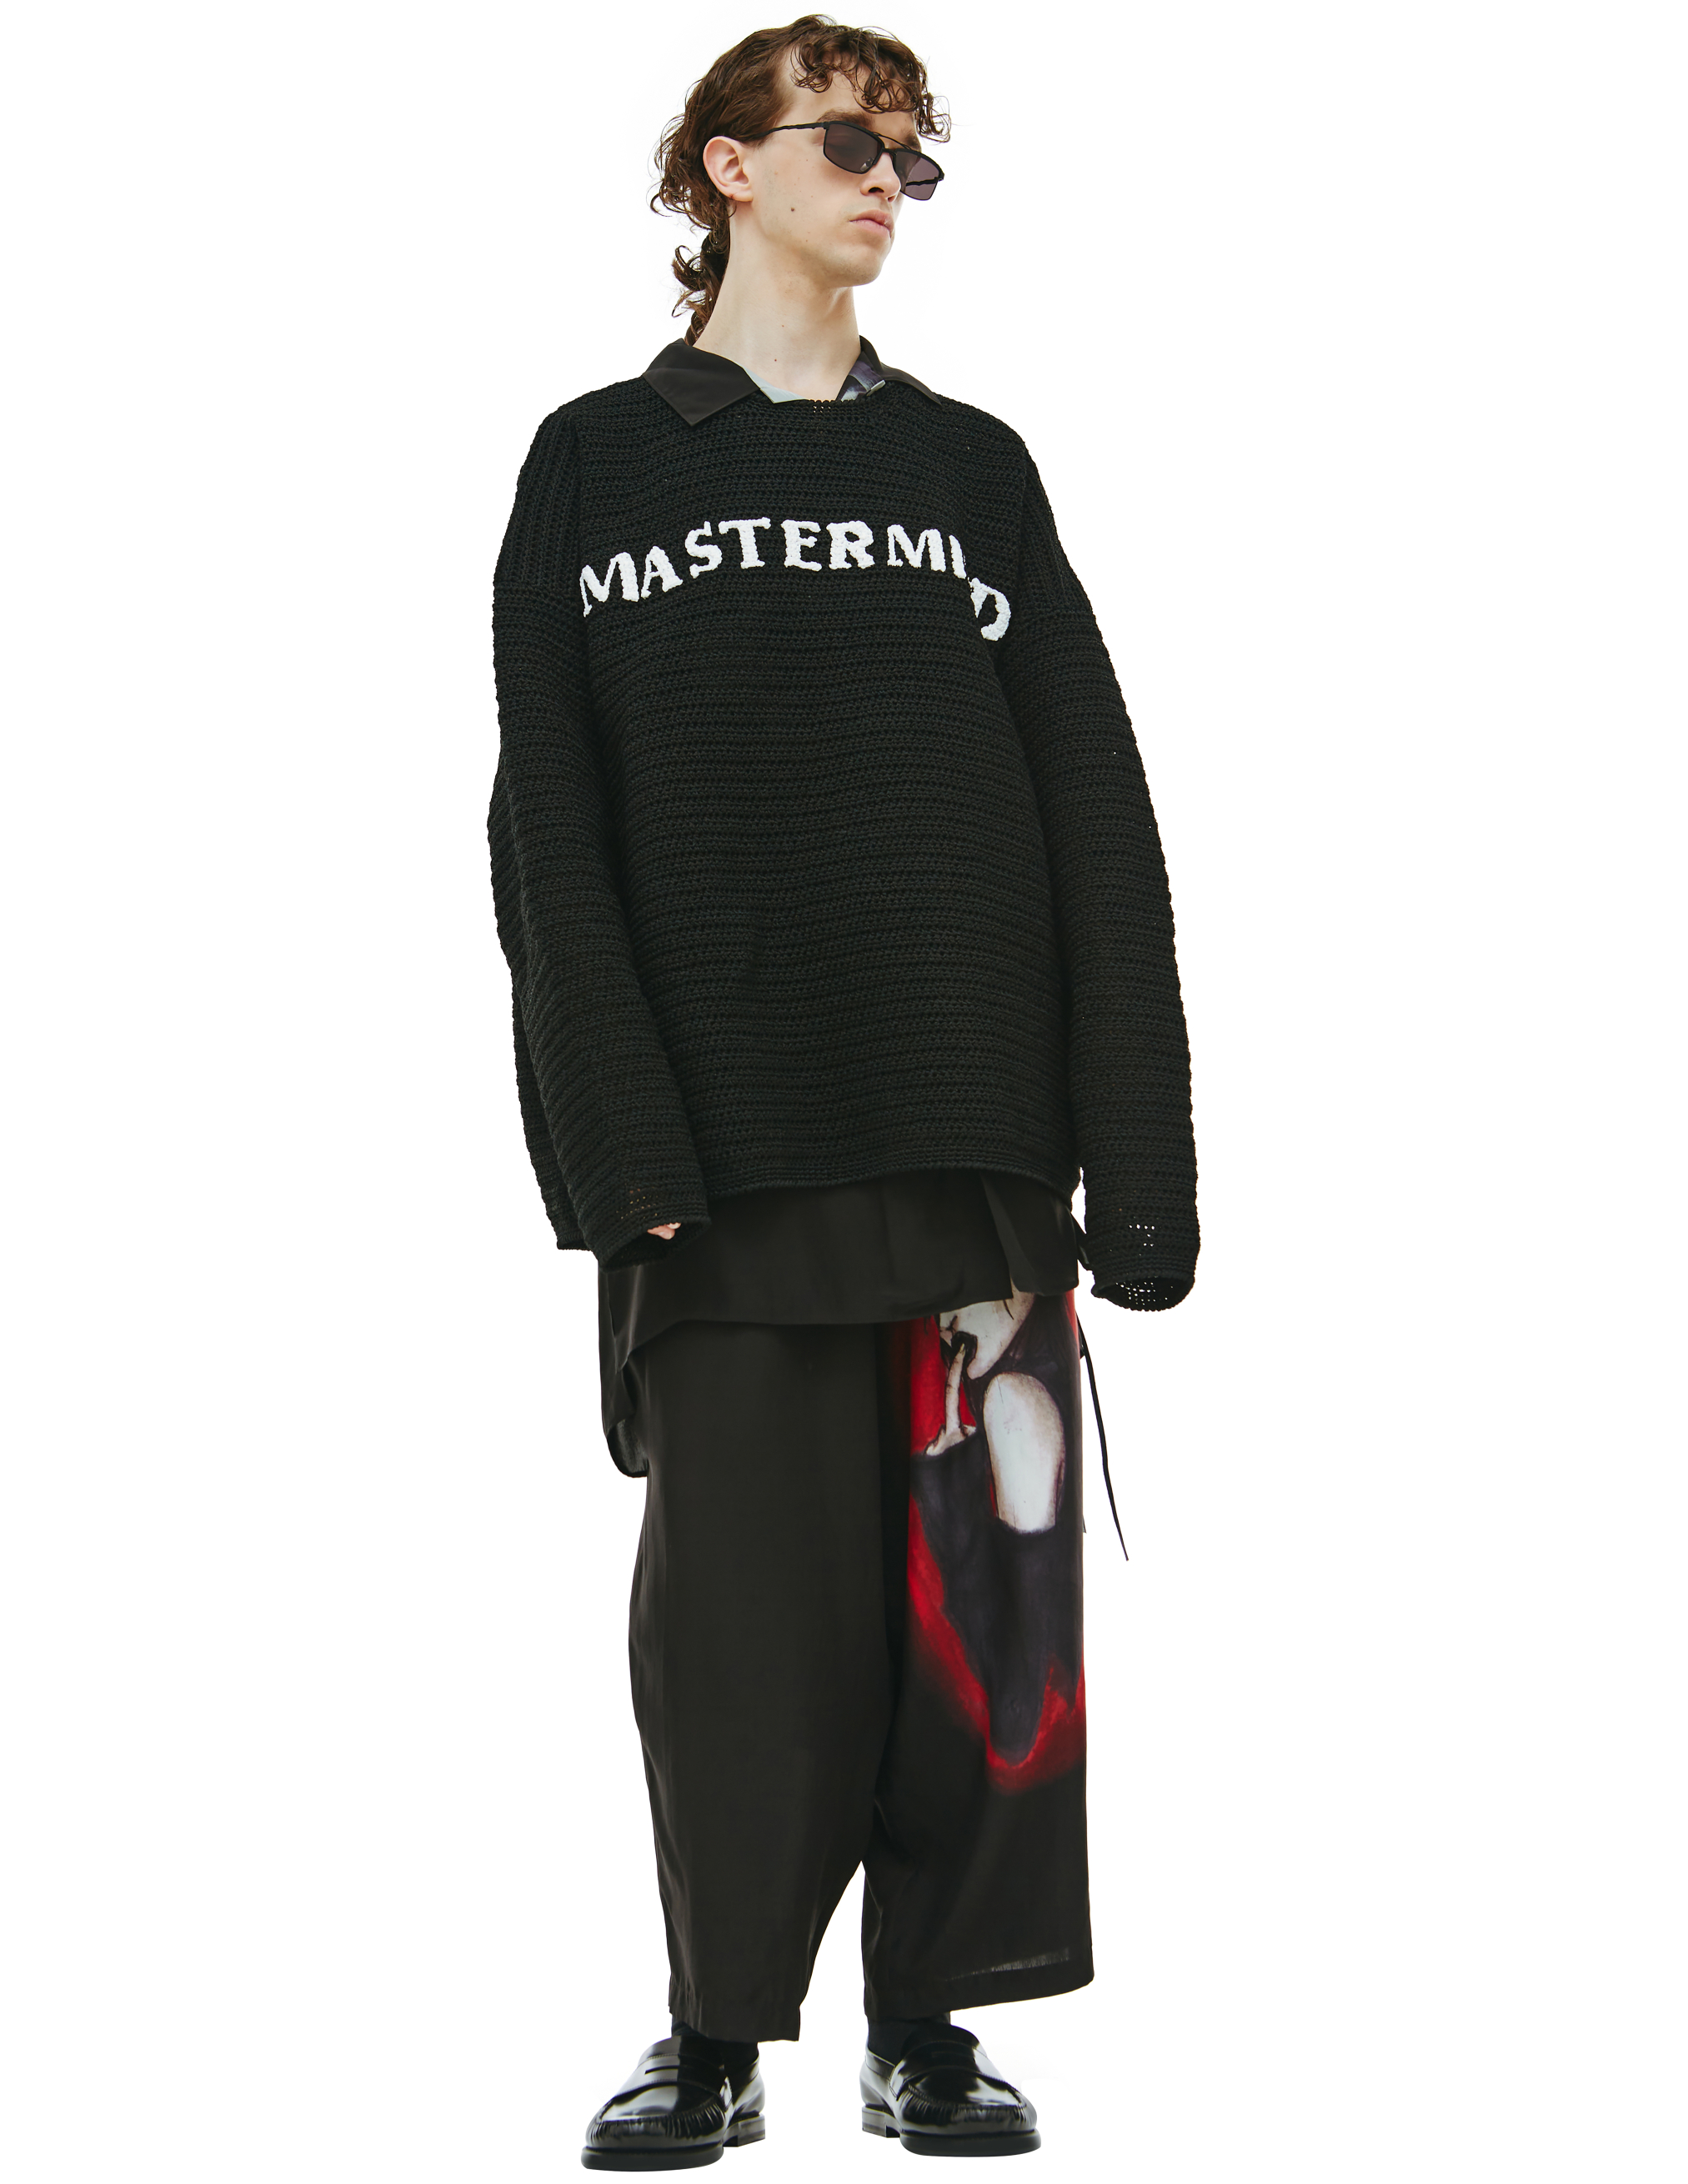 Вязанный свитер с логотипом Mastermind WORLD MW22S08/KN005/603, размер XL